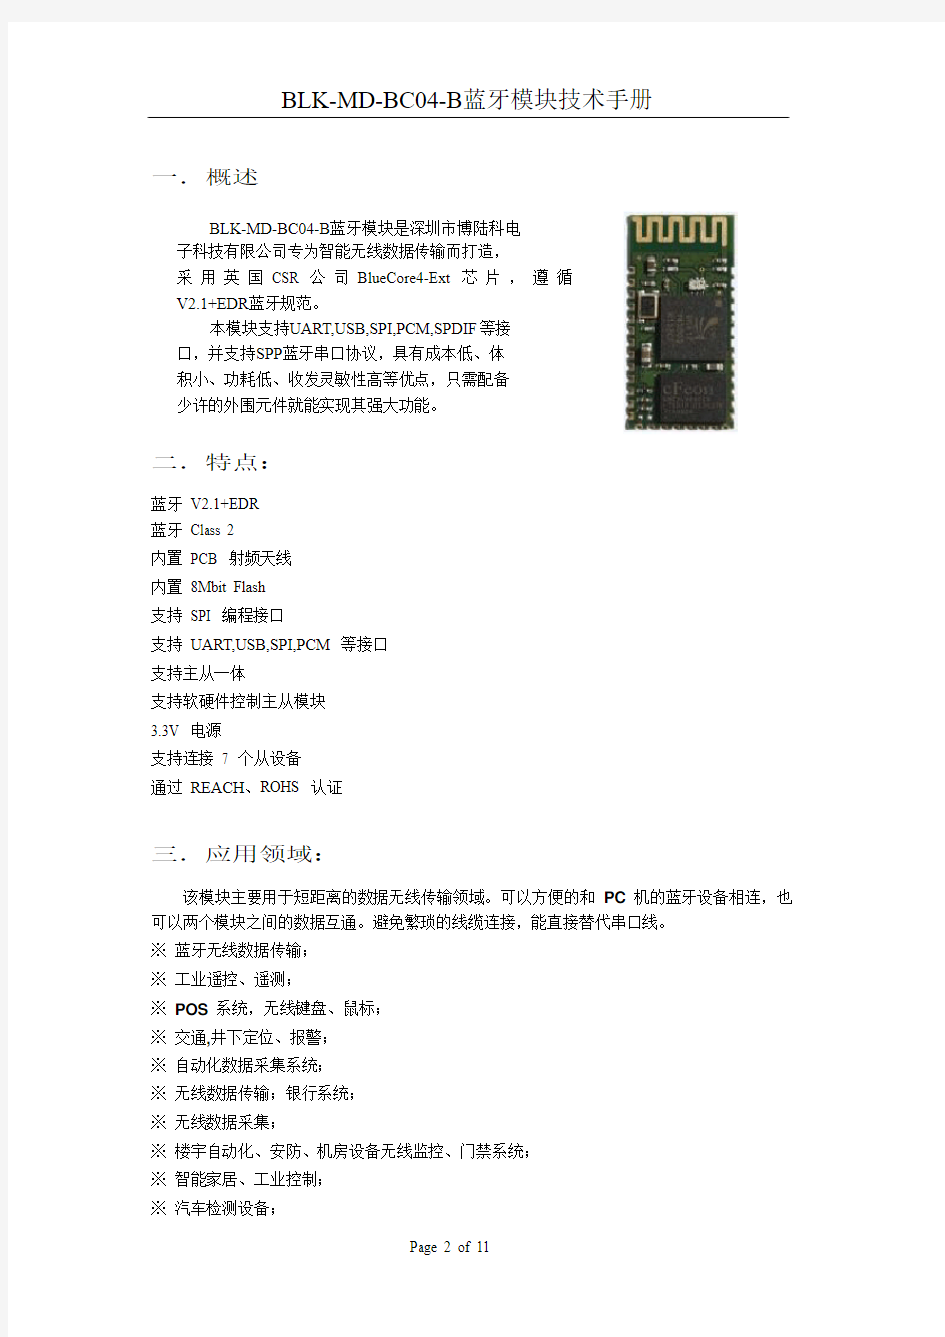 BLK-MD-BC04-B蓝牙模块技术手册